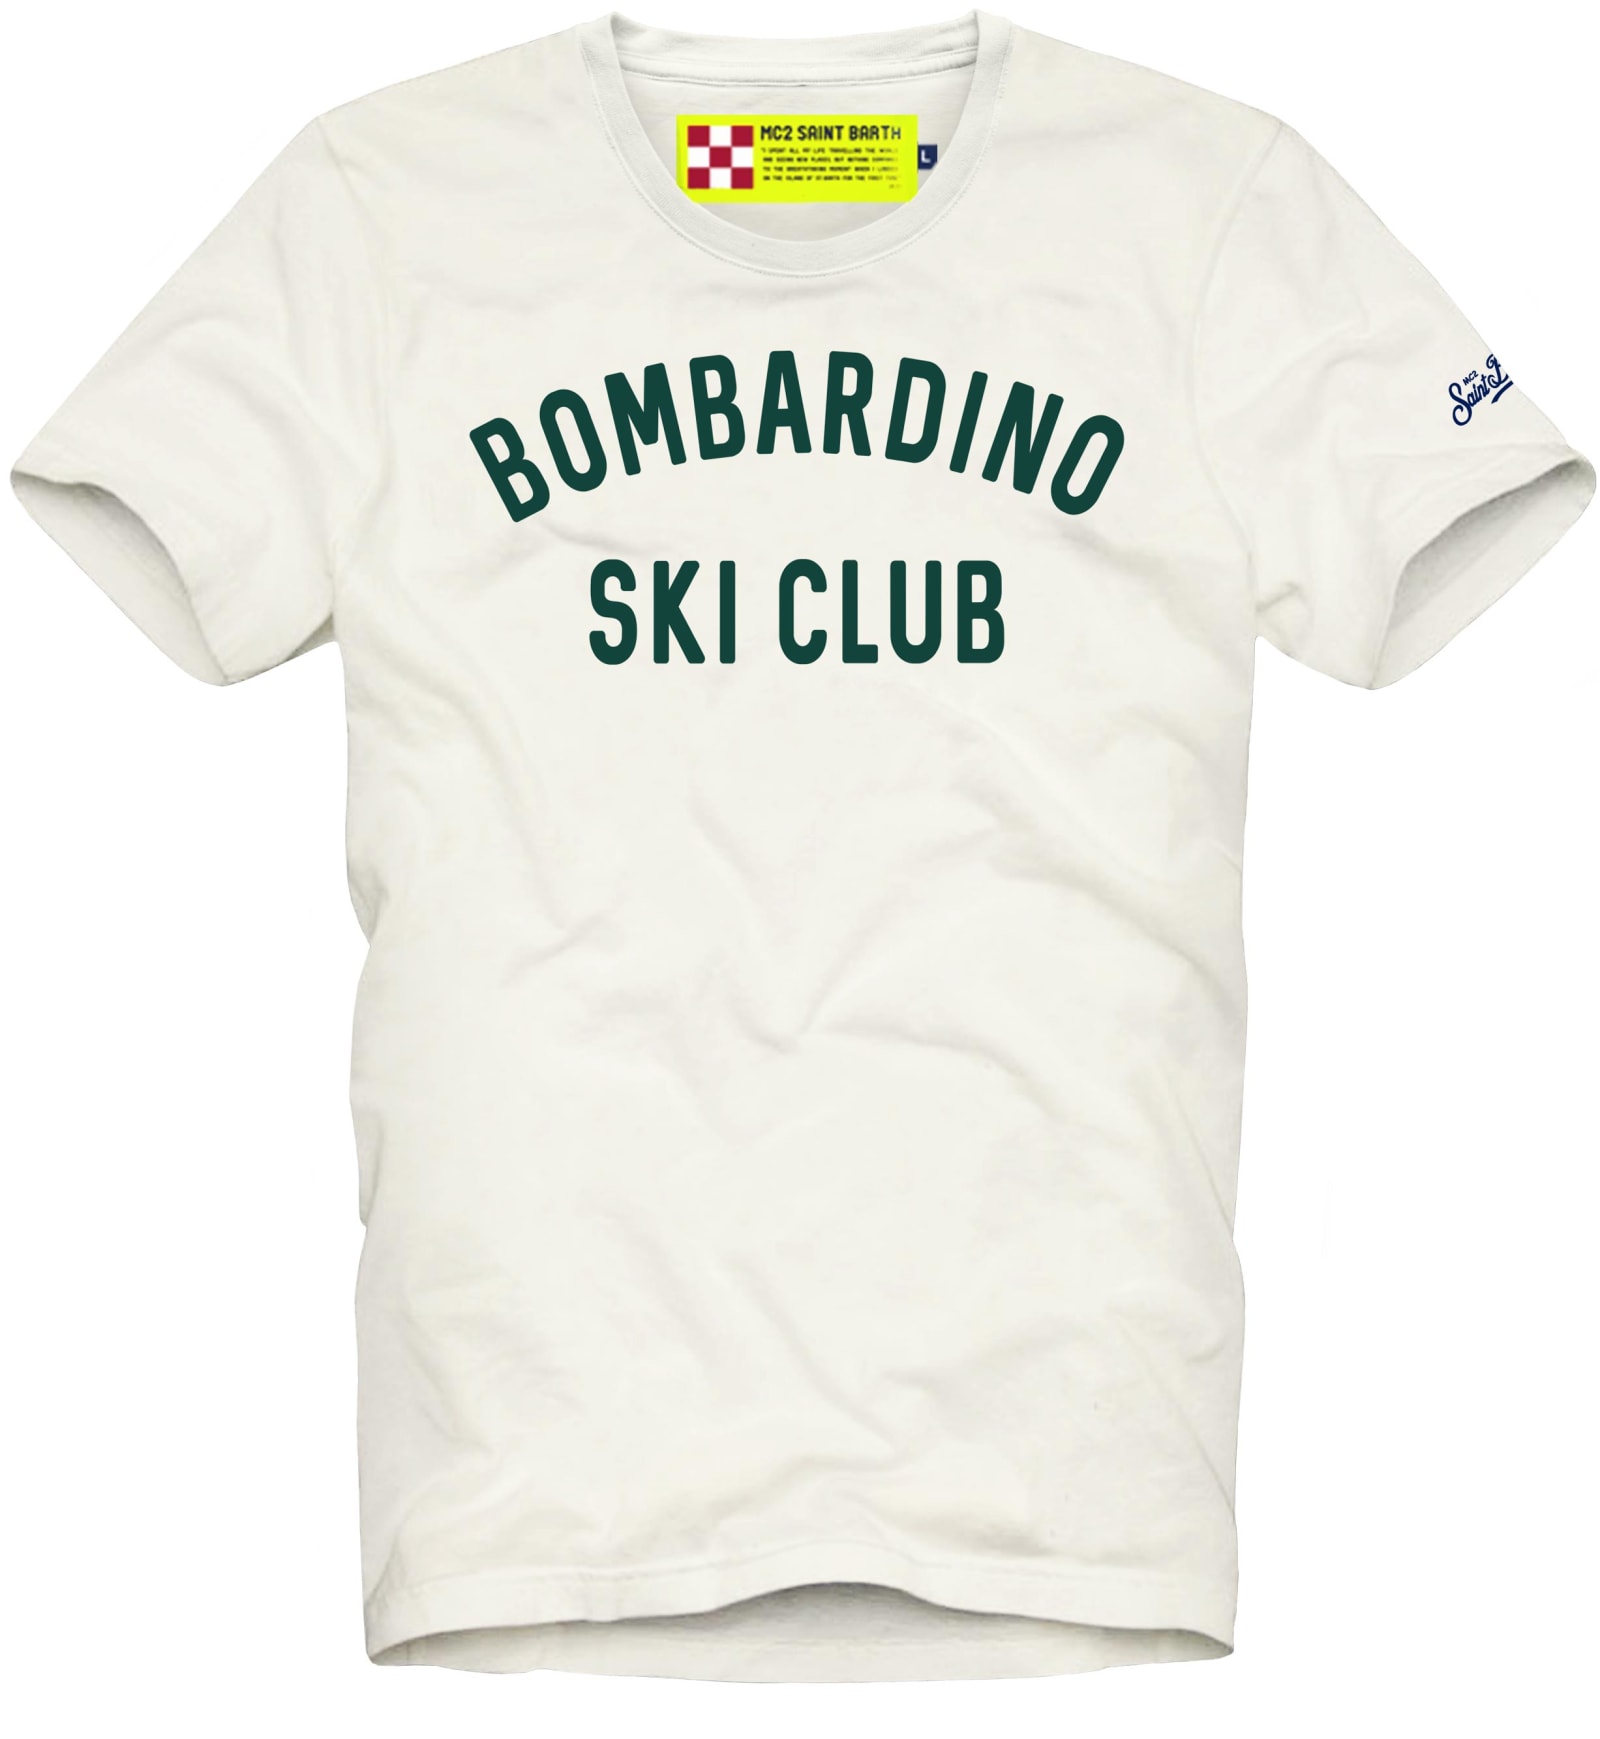 MC2 Saint Barth Bombardino Ski Club T-shirt